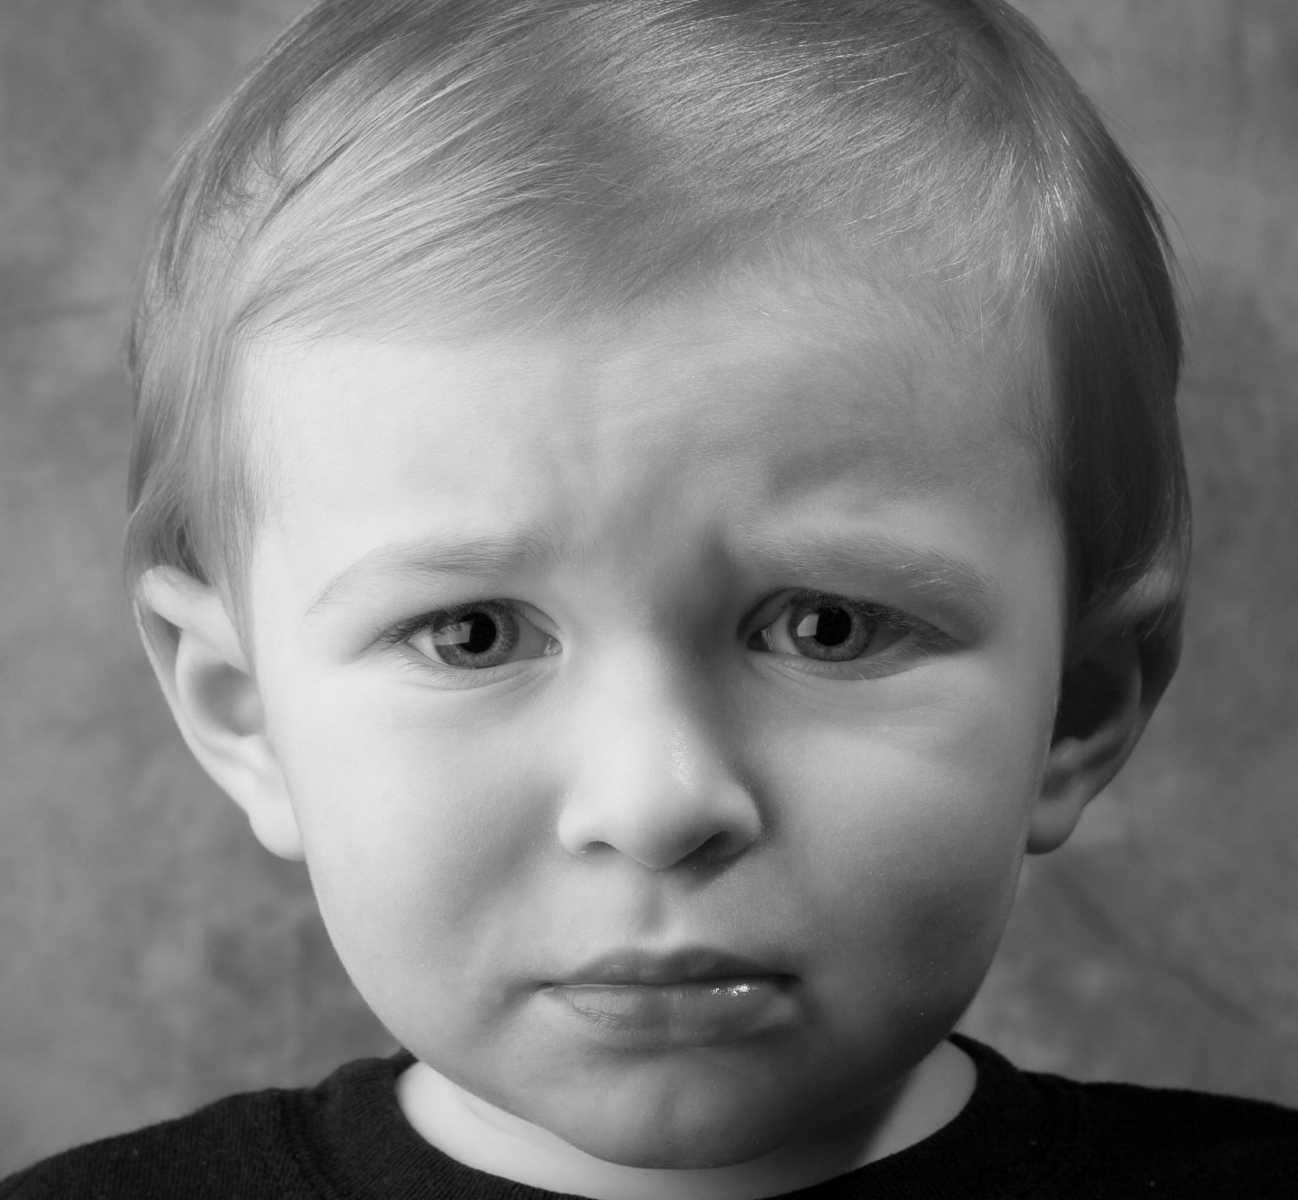 Boy With Sad Face - HD Wallpaper 